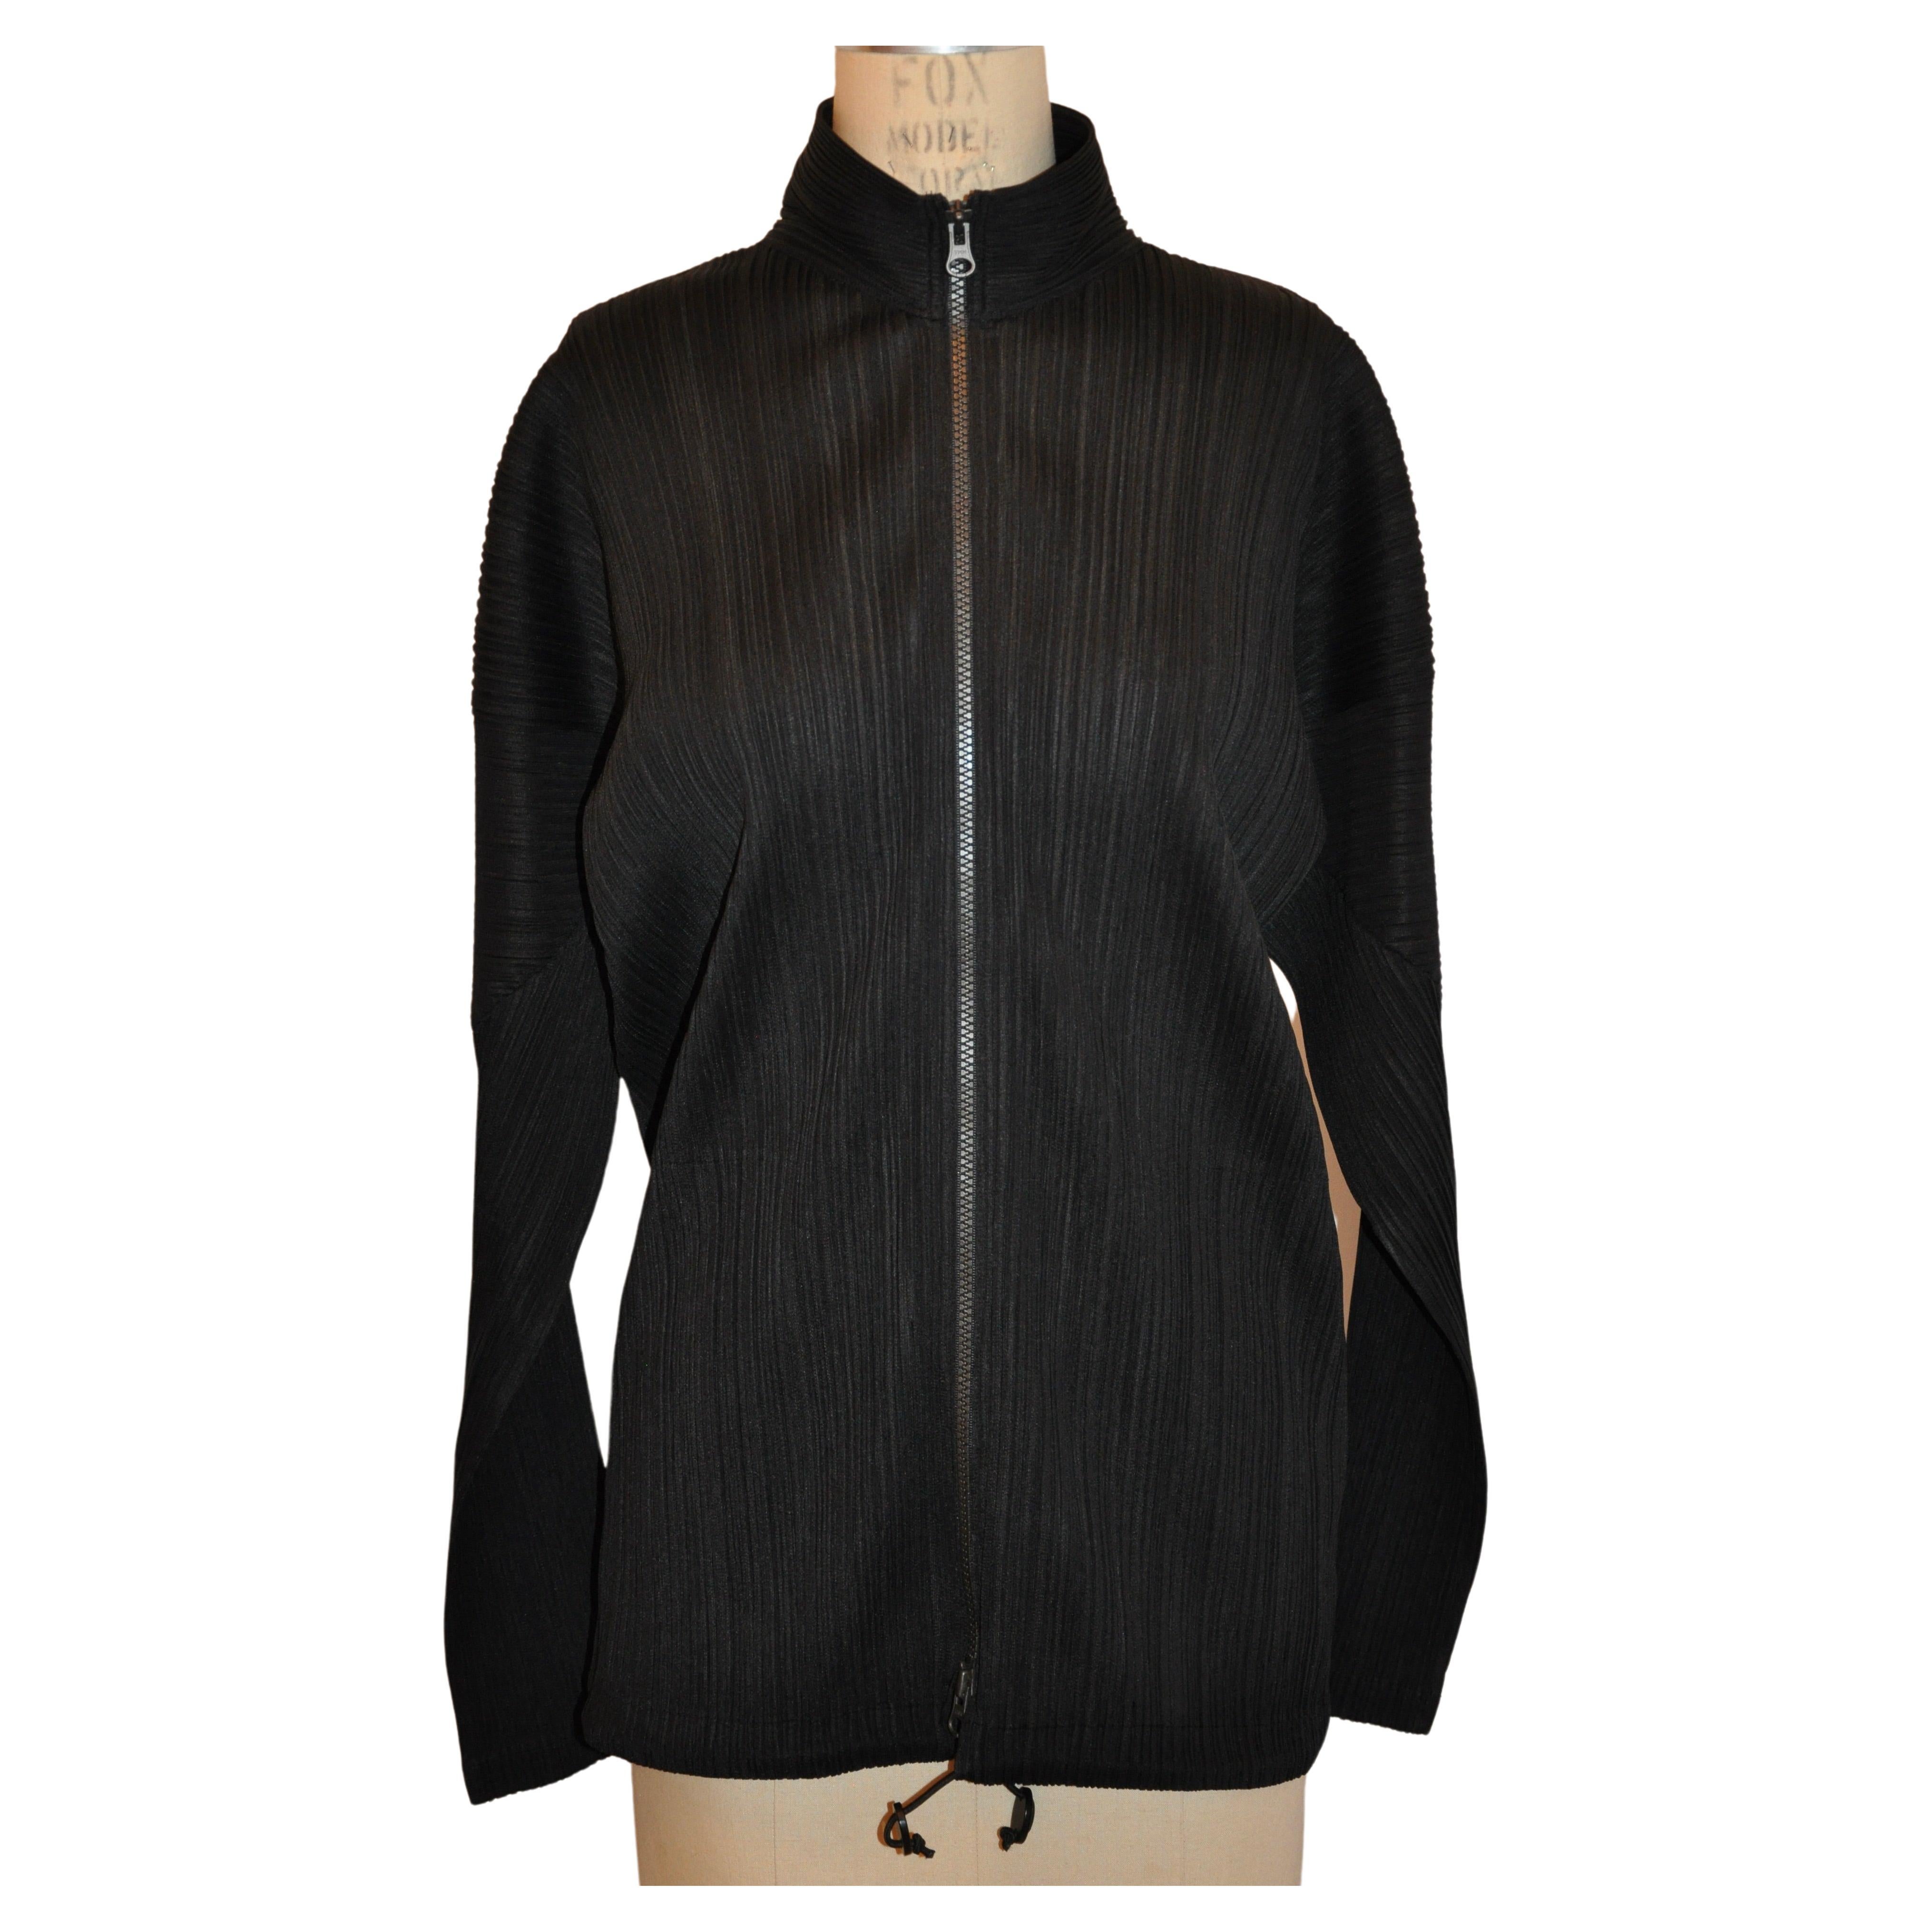 Issey Miyake "Limited Edition" Jet-Black High-Collared, 2-Way Zipper Jacket